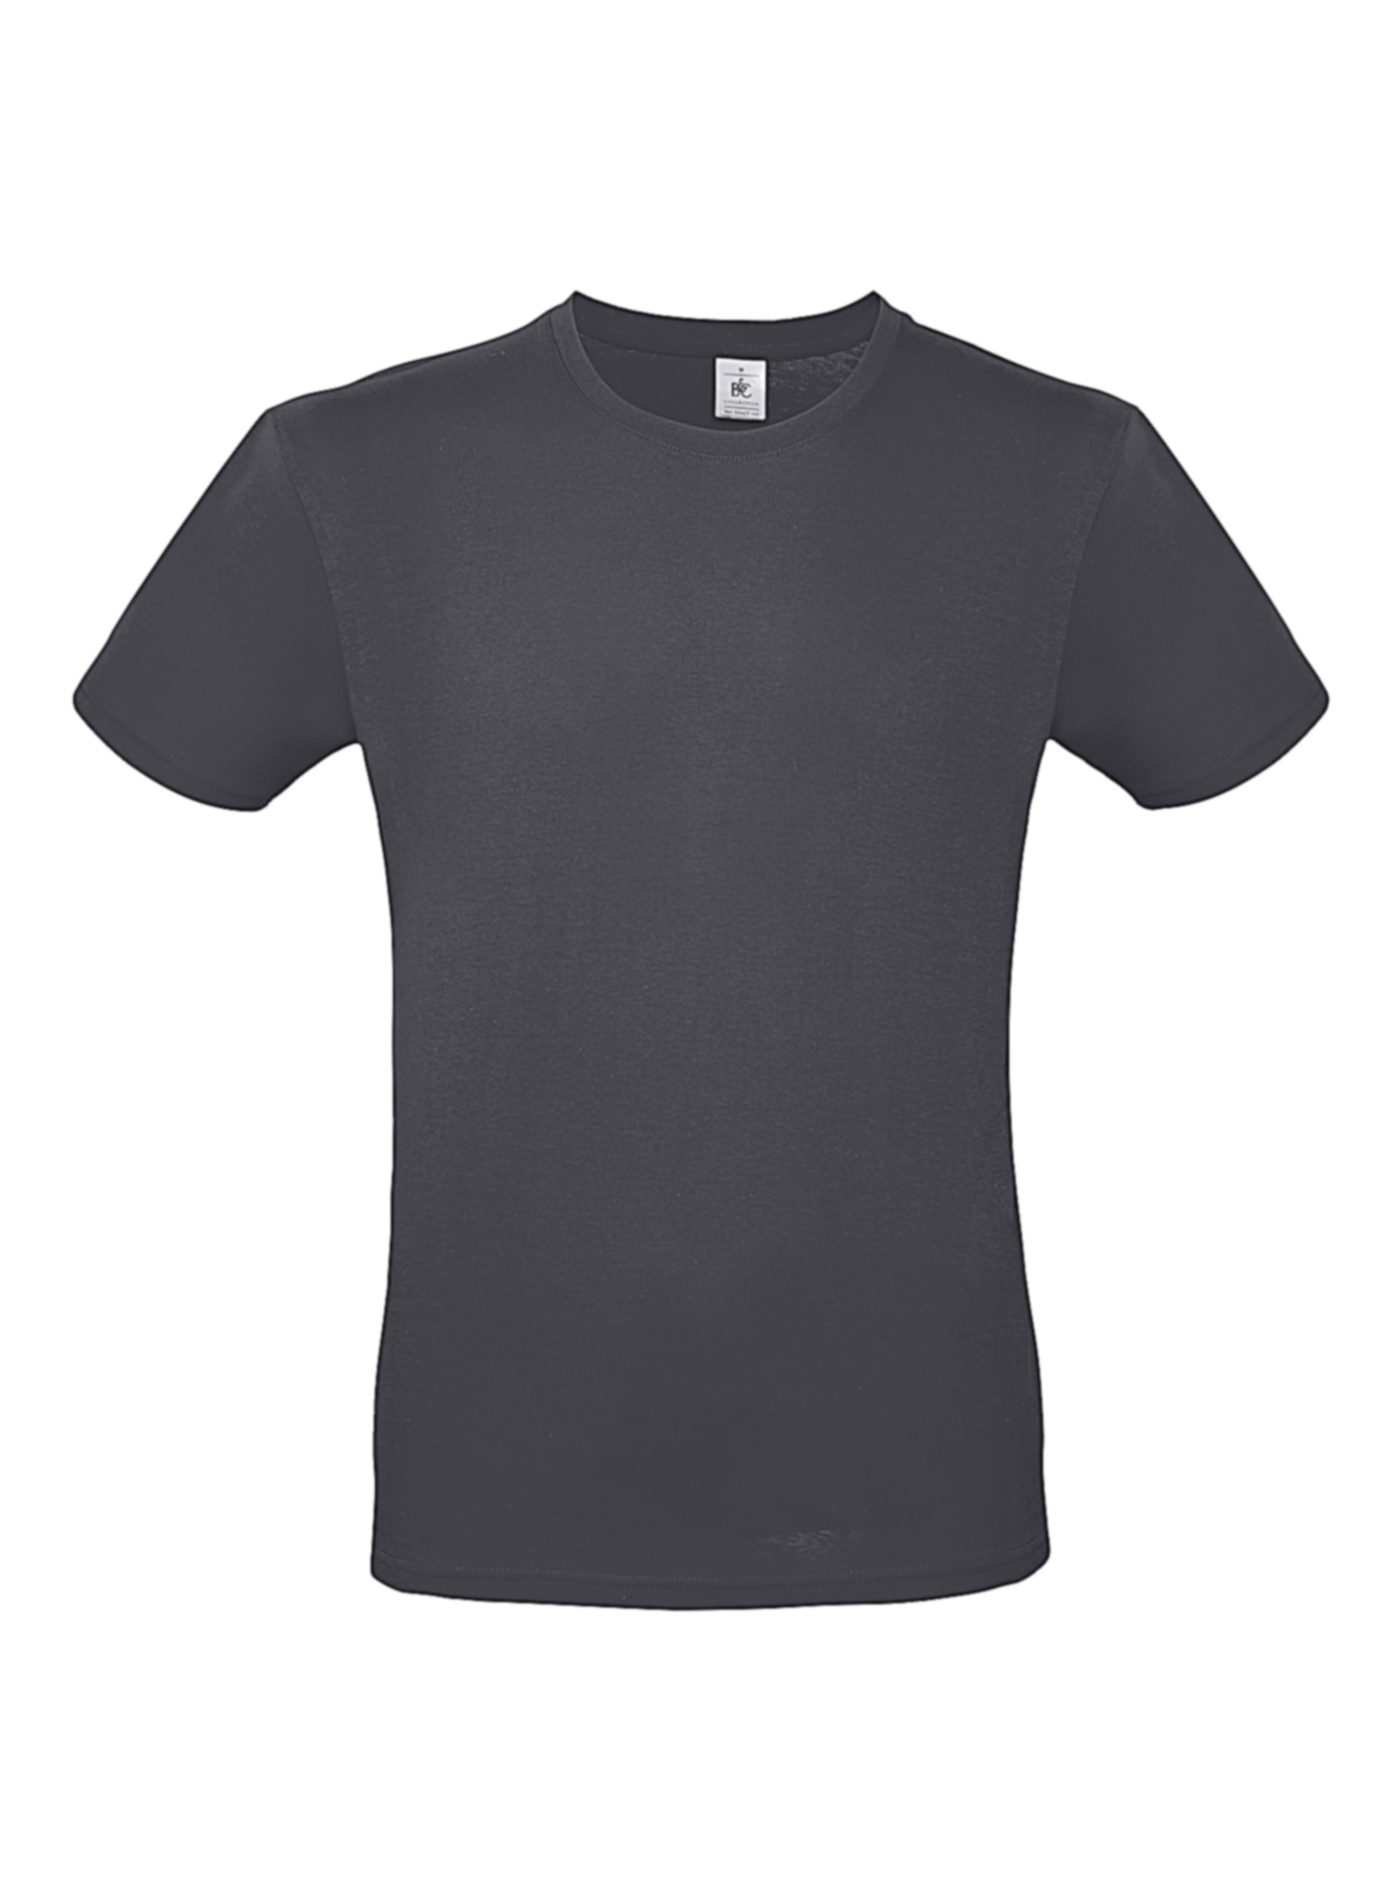 Pánské tričko B&C - Tmavě šedá XL